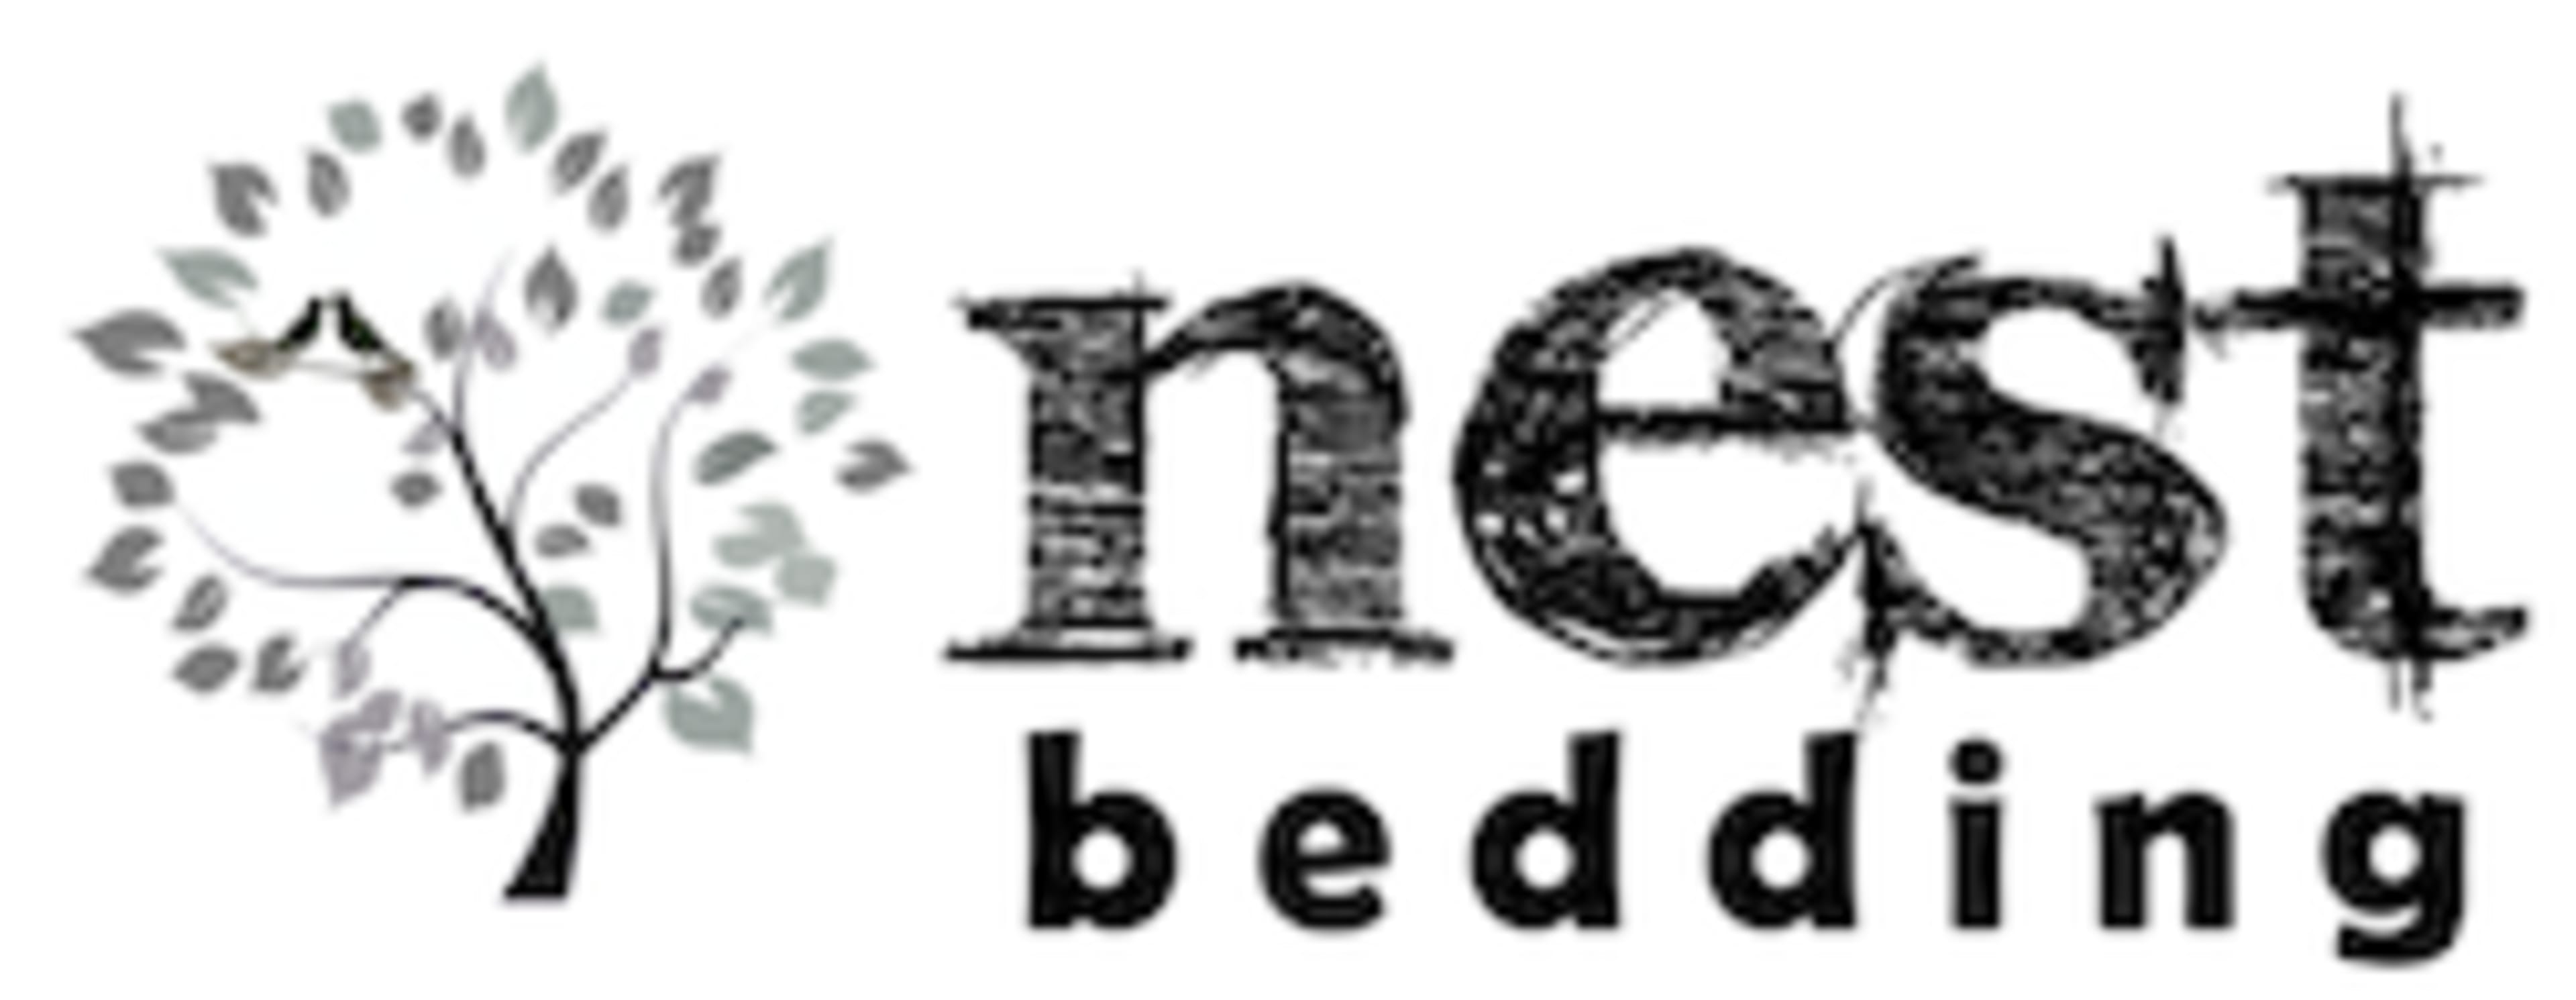 Nest BeddingCode